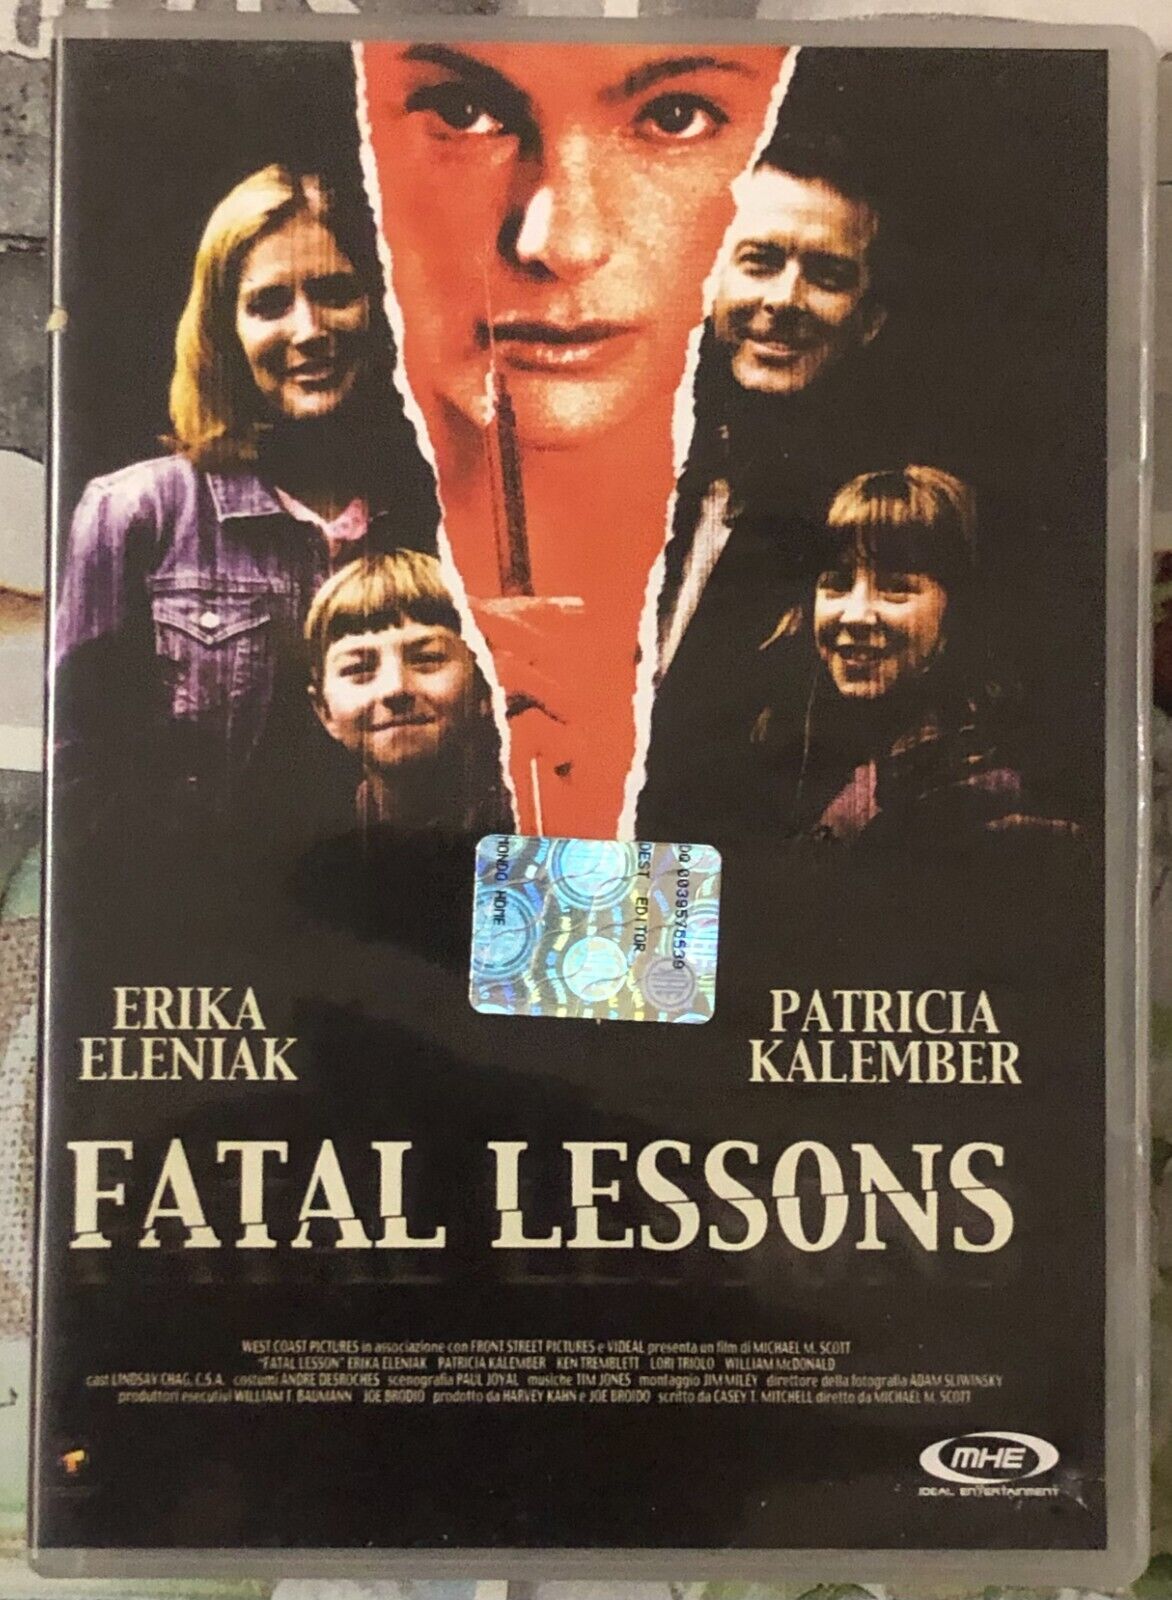  Fatal lessons DVD di Michael Scott, 2004, Mhe Ideal Entertainment